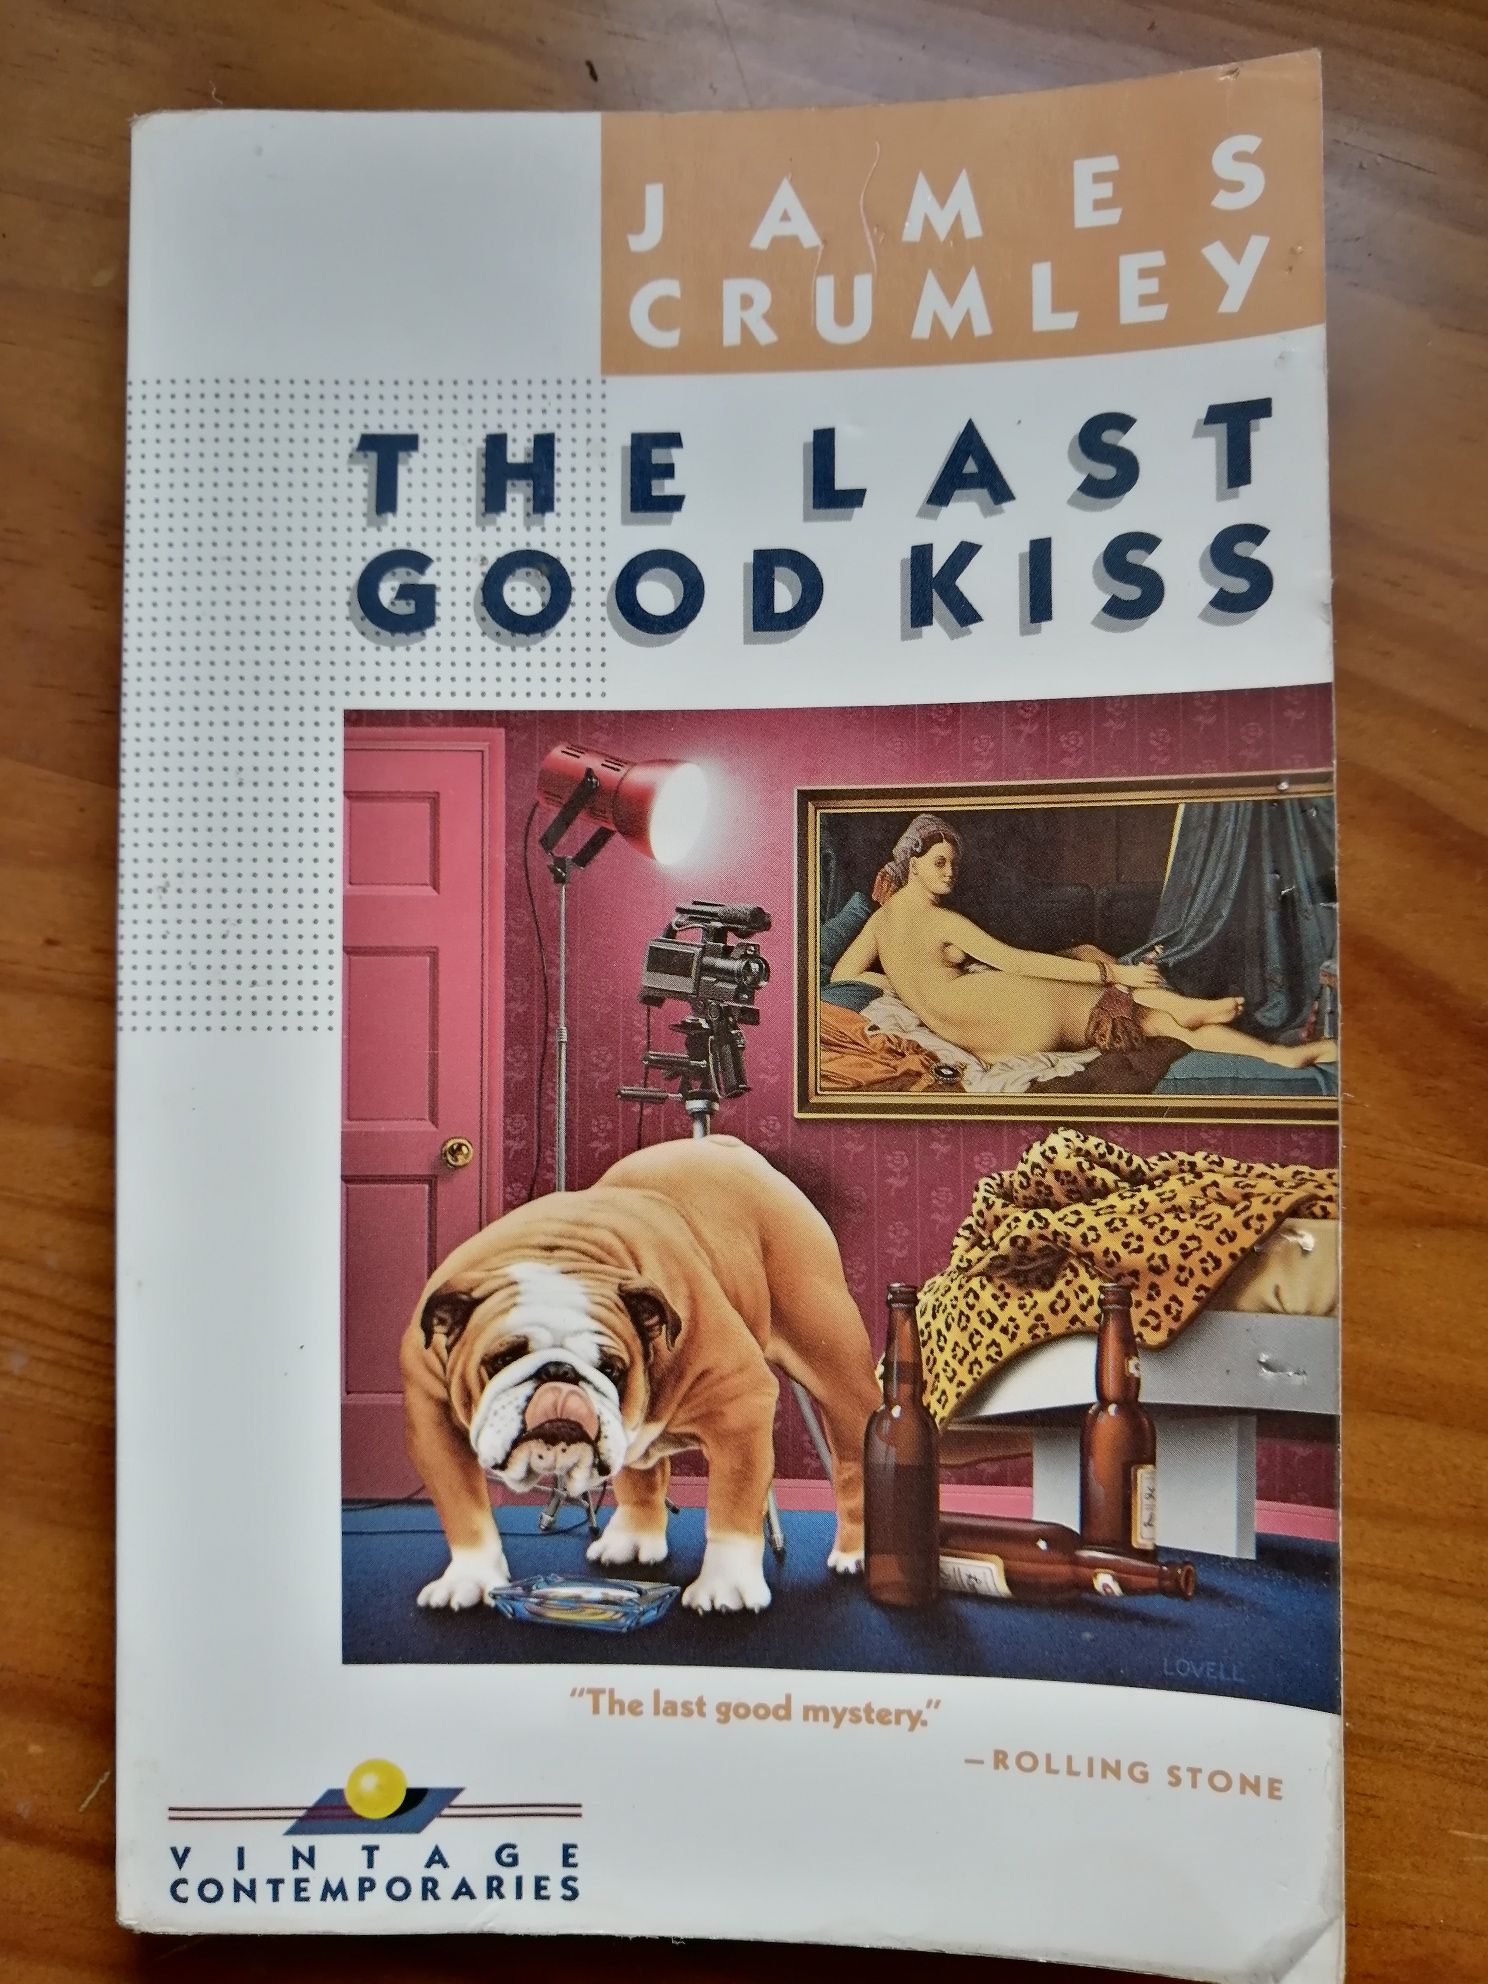 Livro "the last good kiss" de James Crumley